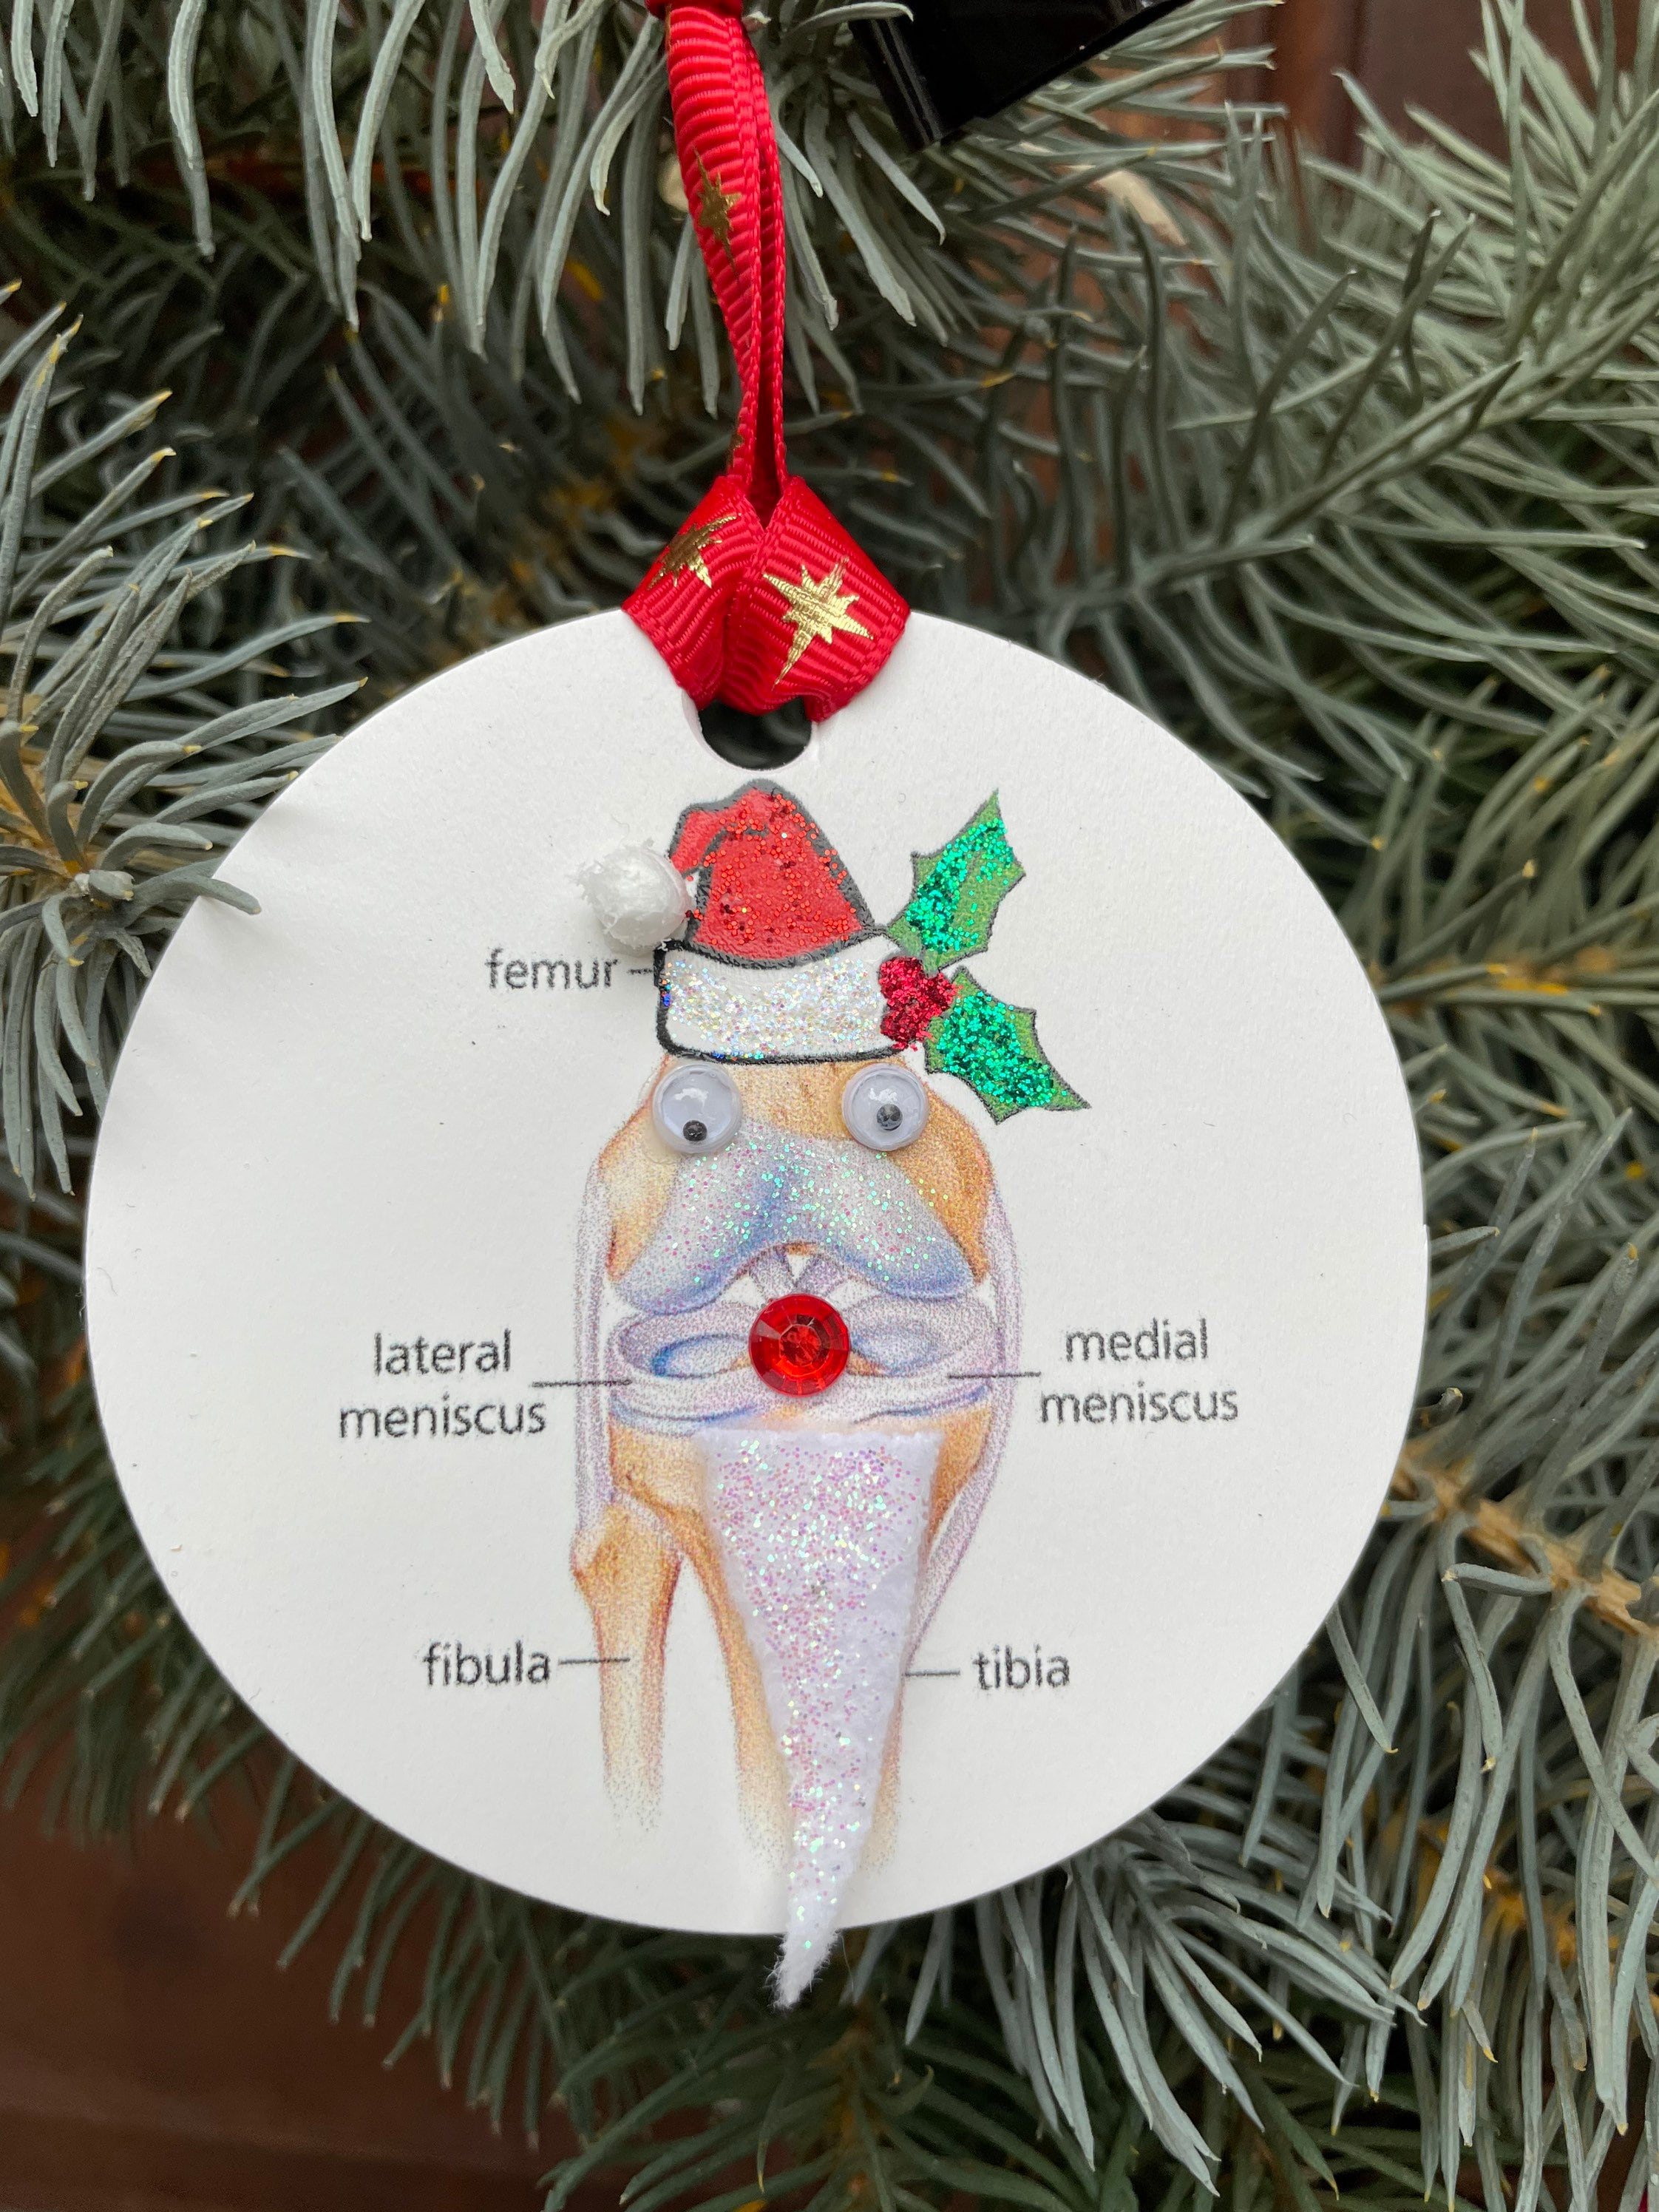 amateur surgeon christmas edition reindeer Sex Pics Hd